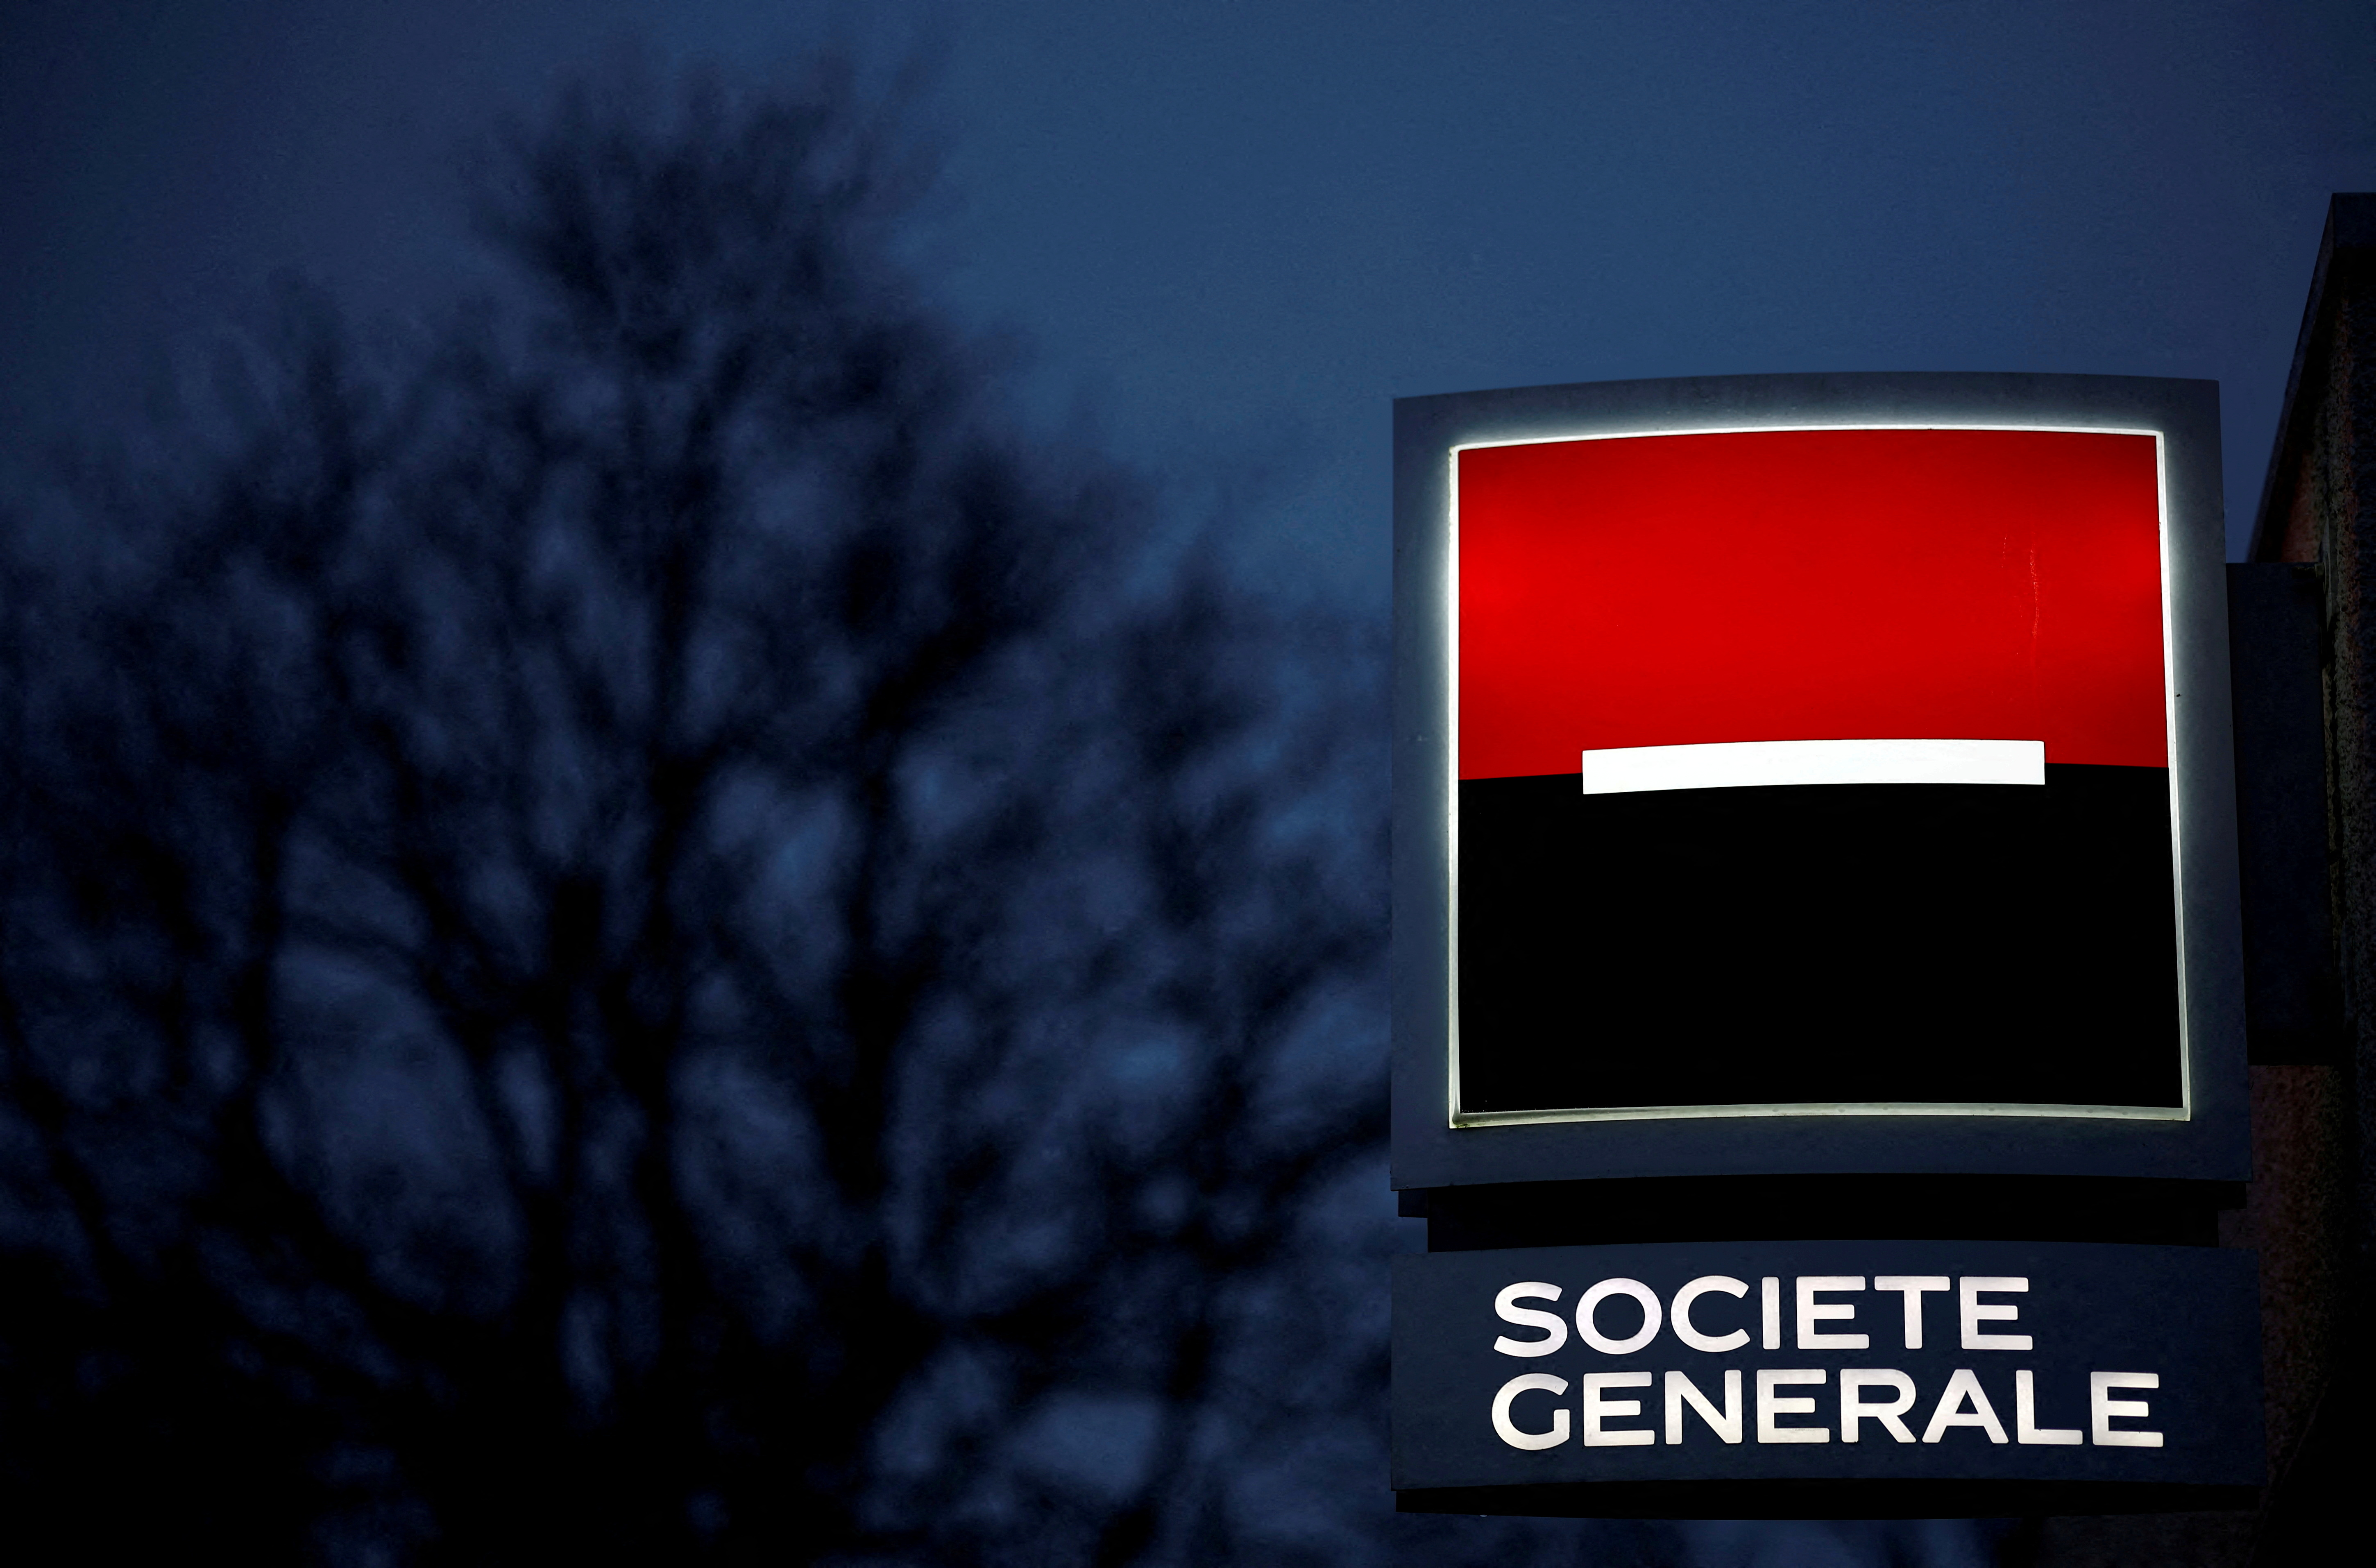 Logo of Societe Generale outside a bank office in Nantes